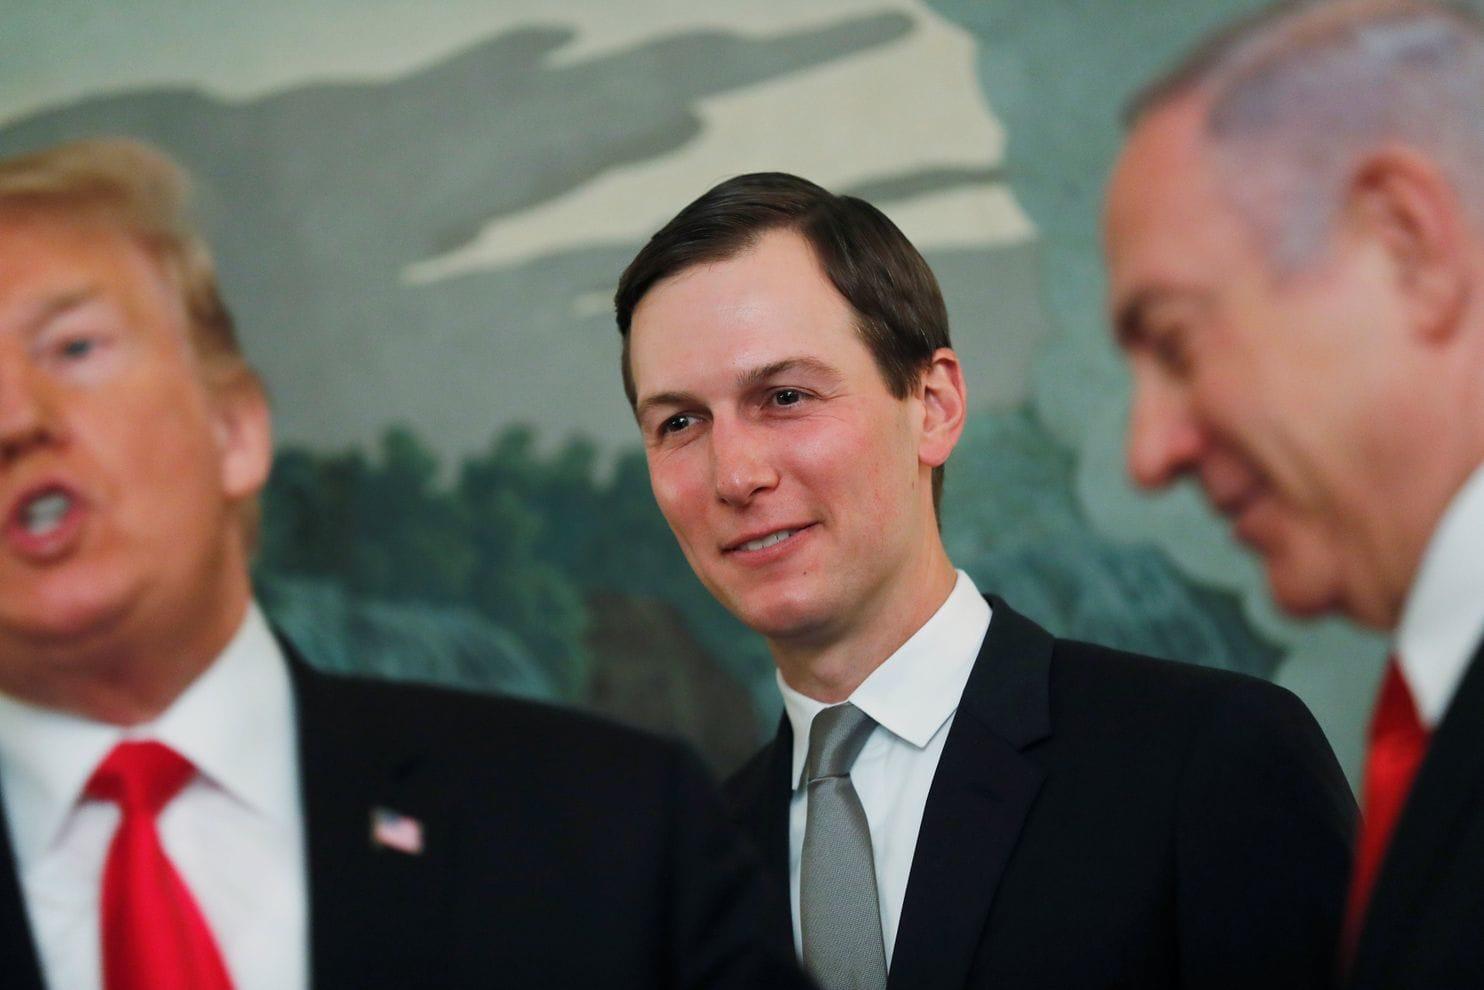 Jared Kushner smiles with Benjamin Netanyahu while Donald Trump faces reporters